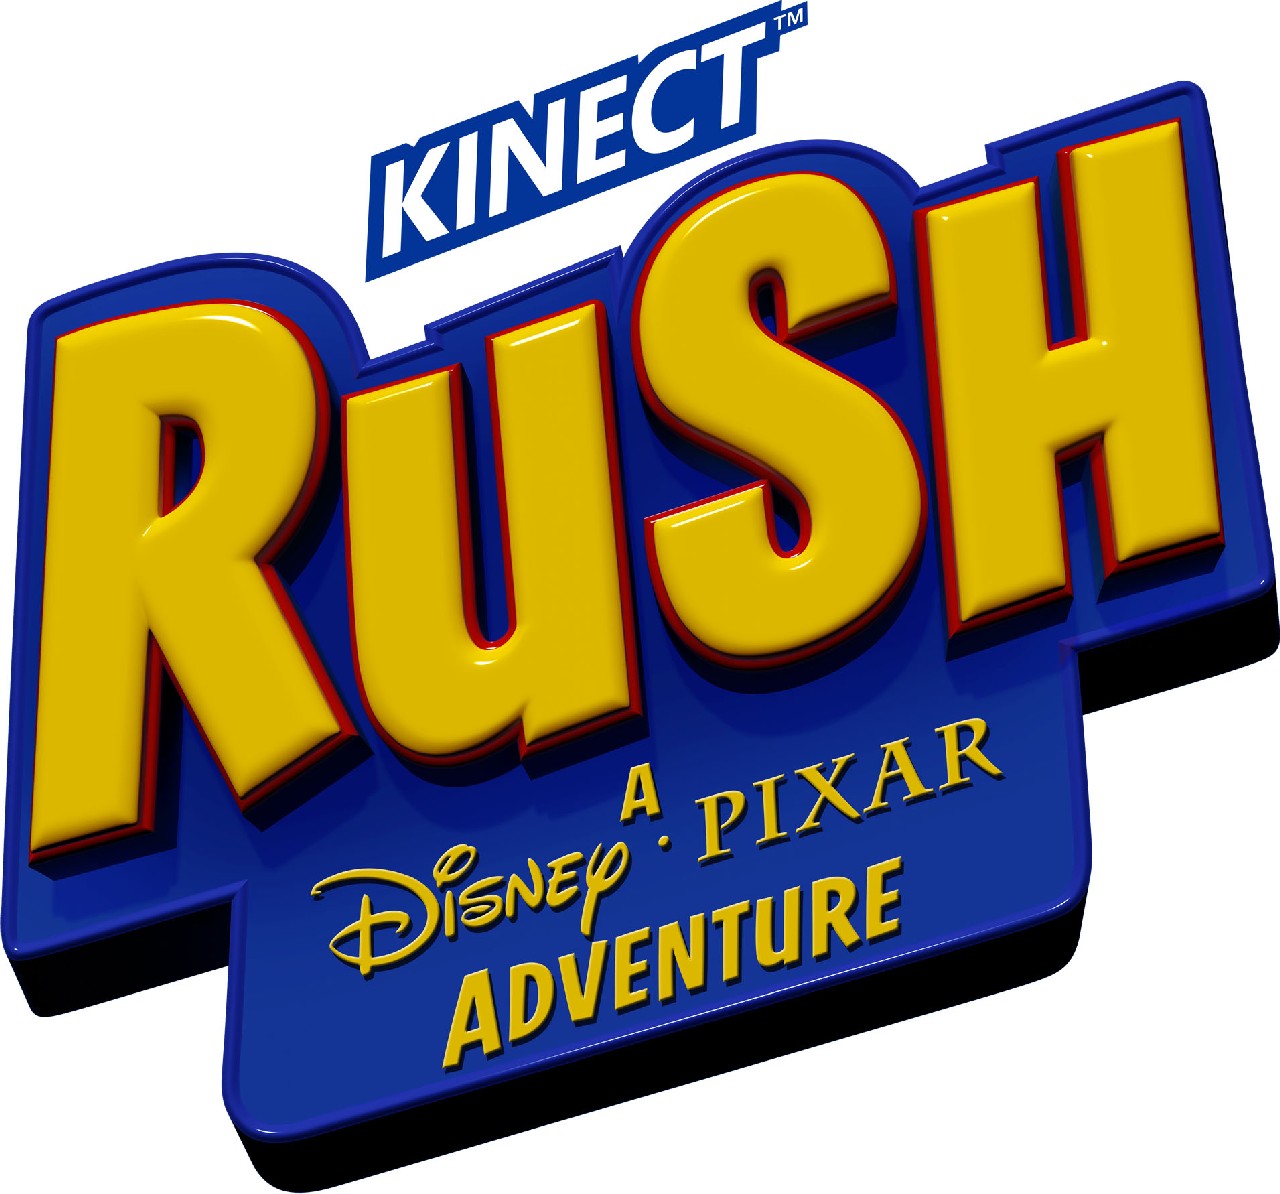 Kinect Rush: A Disney/Pixar Adventure | Pixar Wiki | Fandom